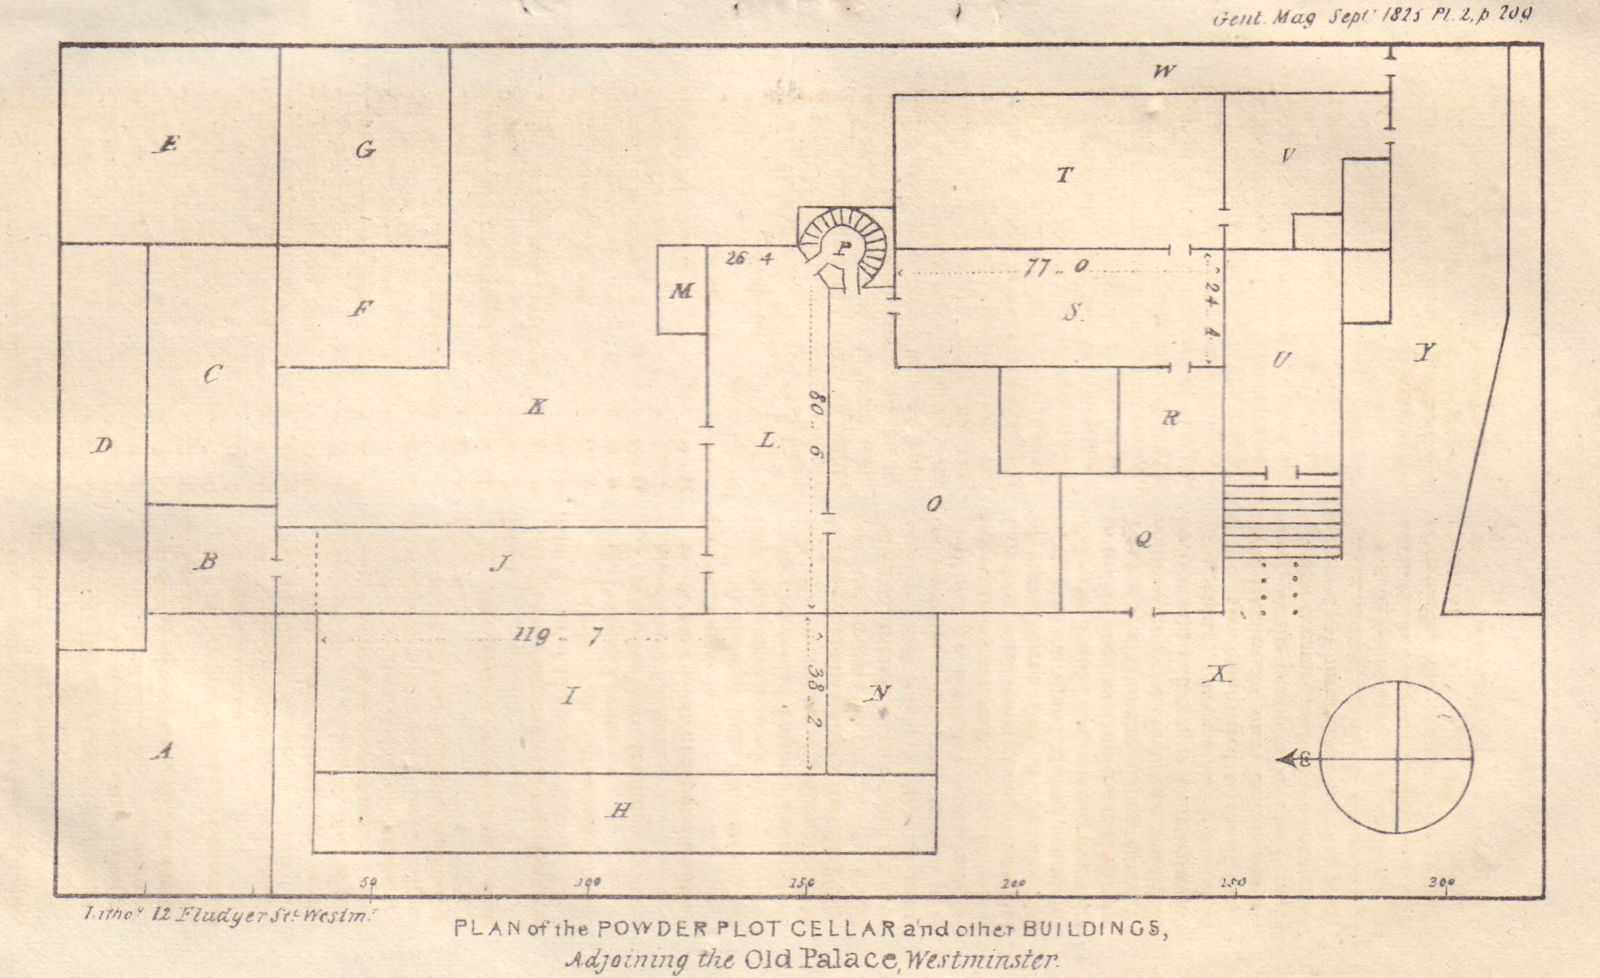 Gunpower plot cellar plan, Westminster Old Palace, London. Guy Fawkes 1825 map